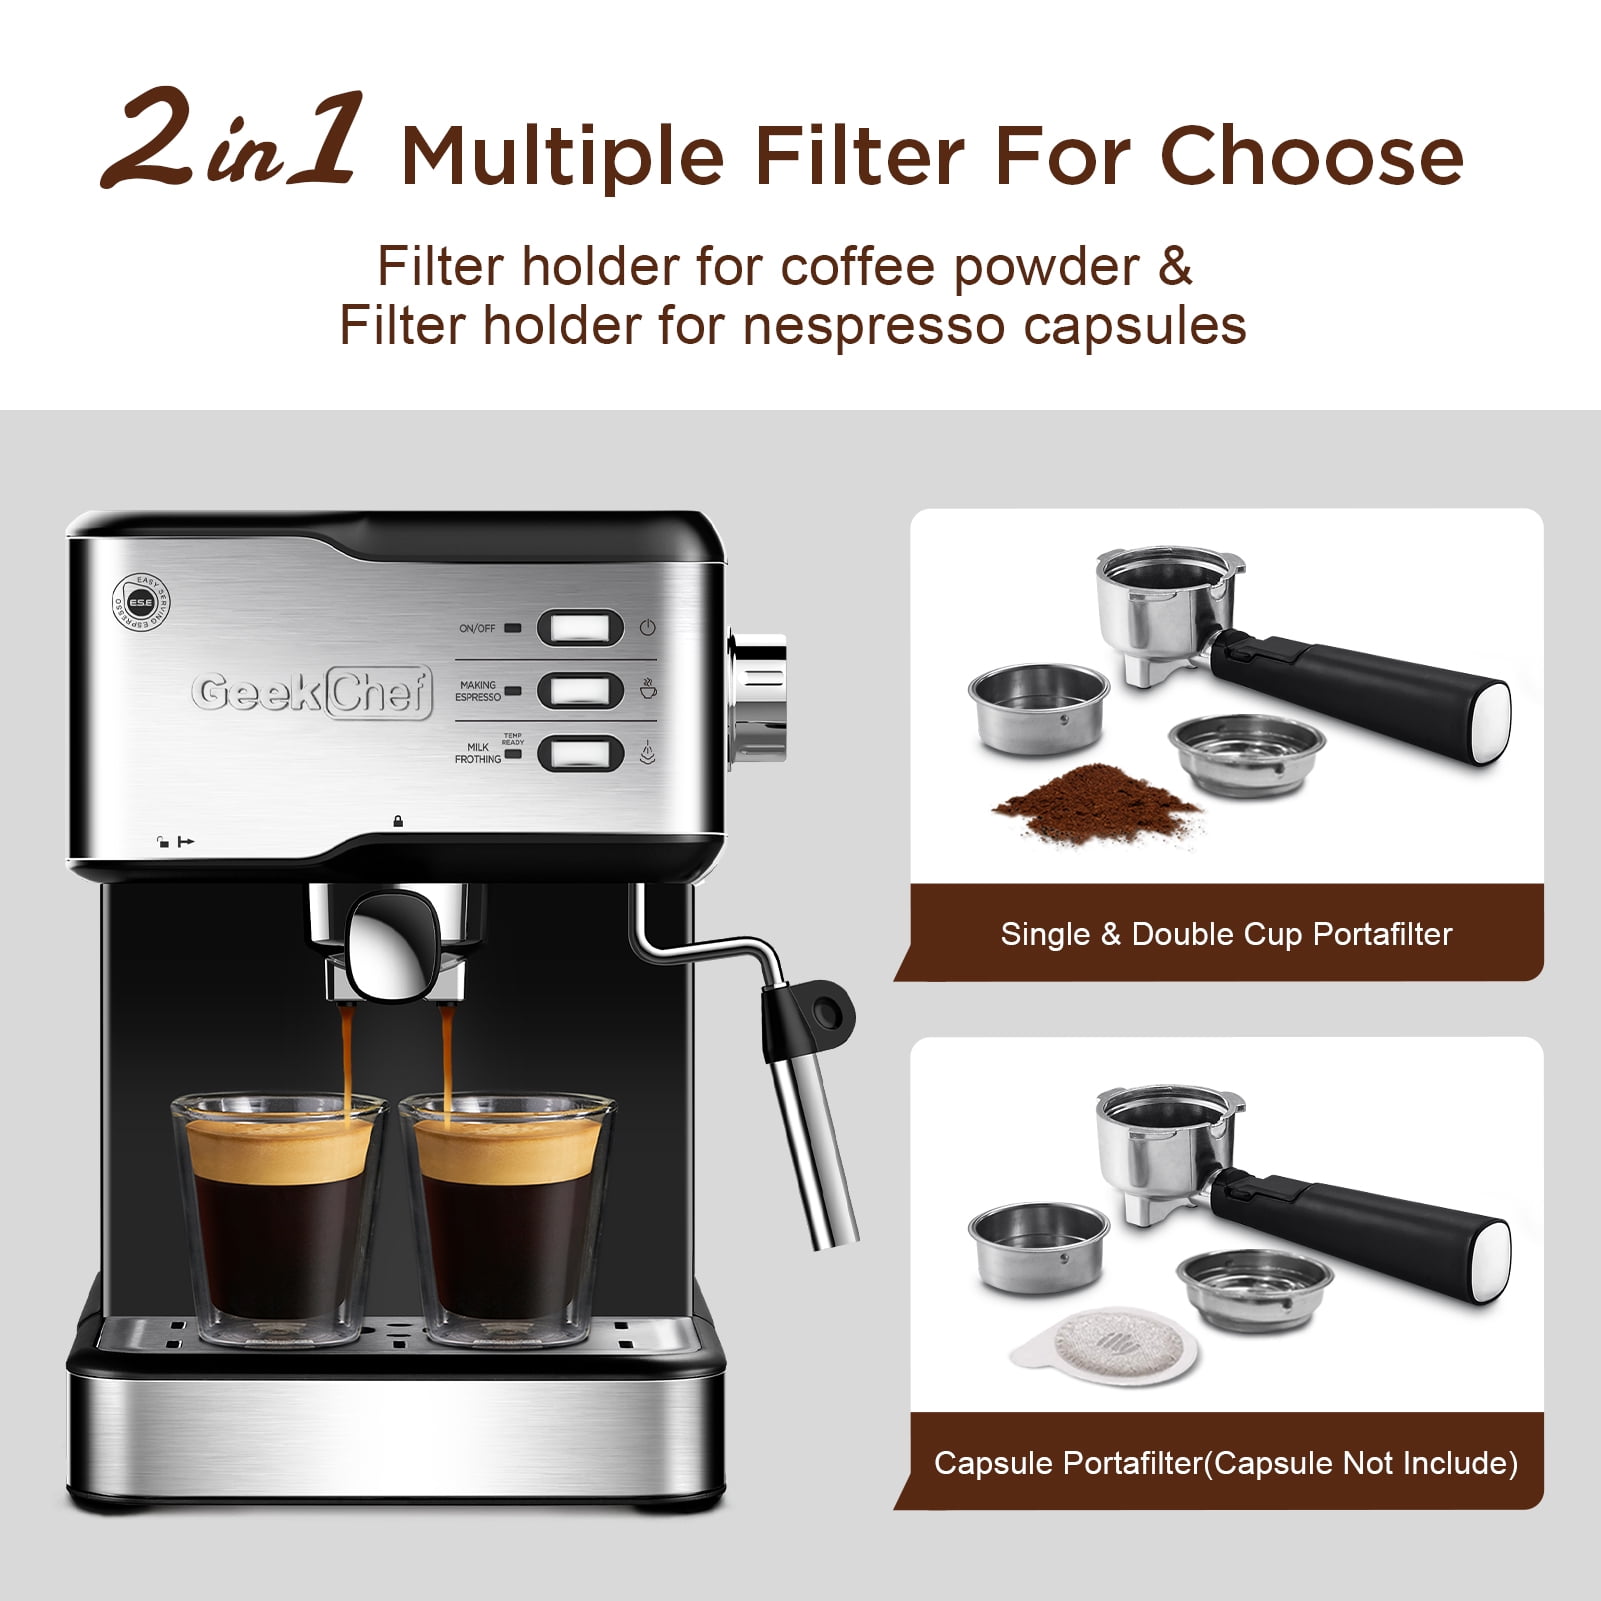 Café Coffee Makers, Espresso Machines & Toasters